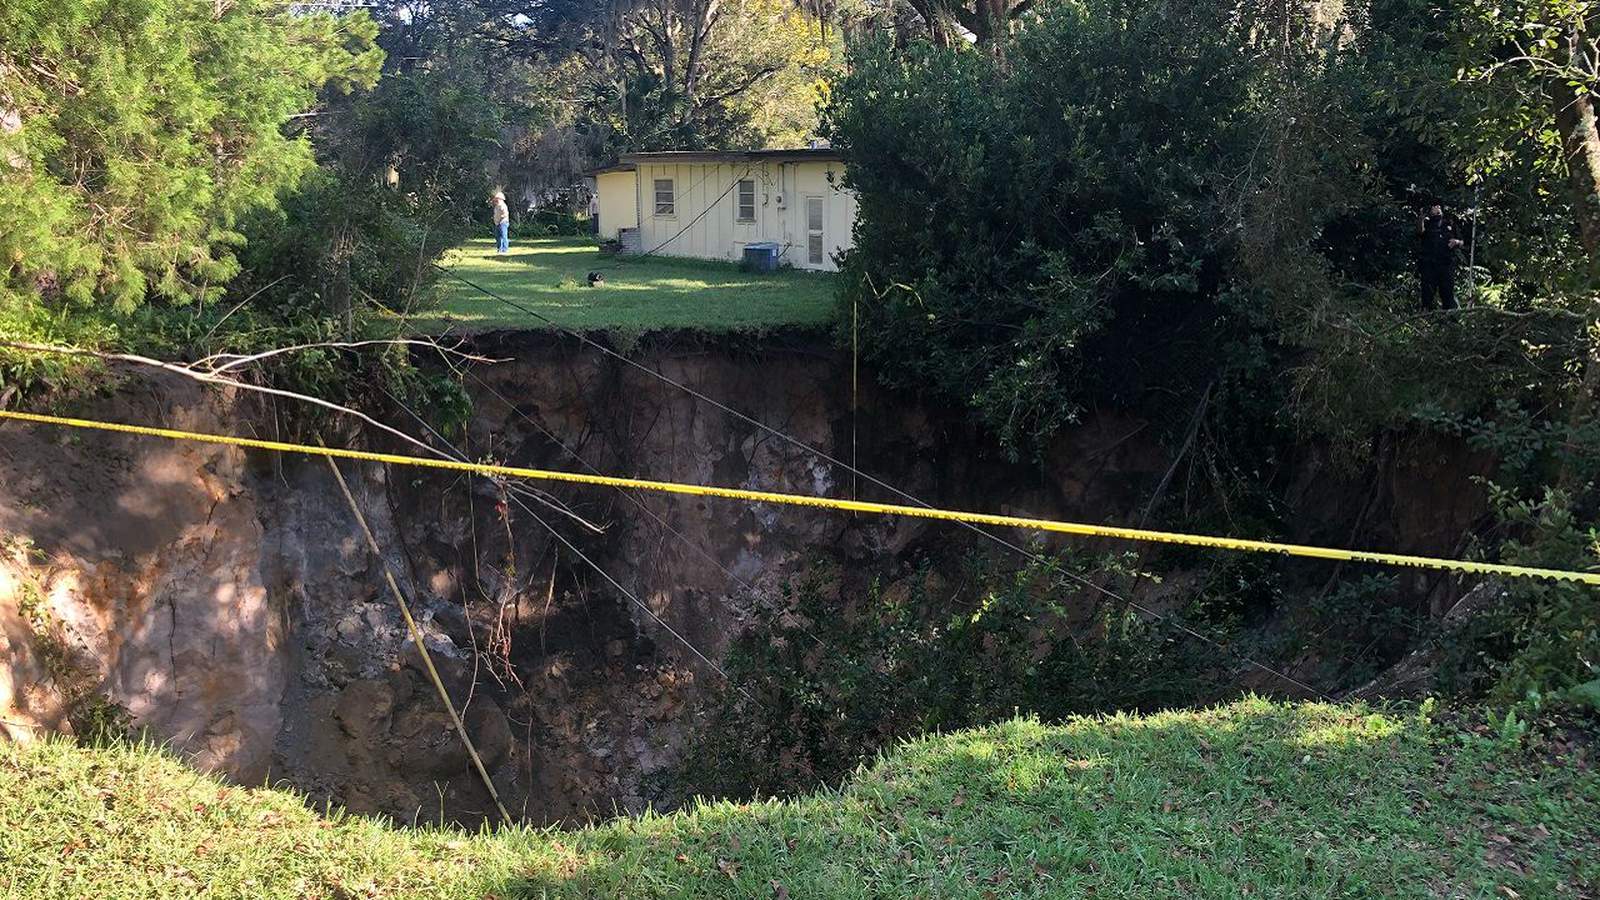 Sinkhole in Florida neighborhood expands to 50 feet wide, 30 feet deep